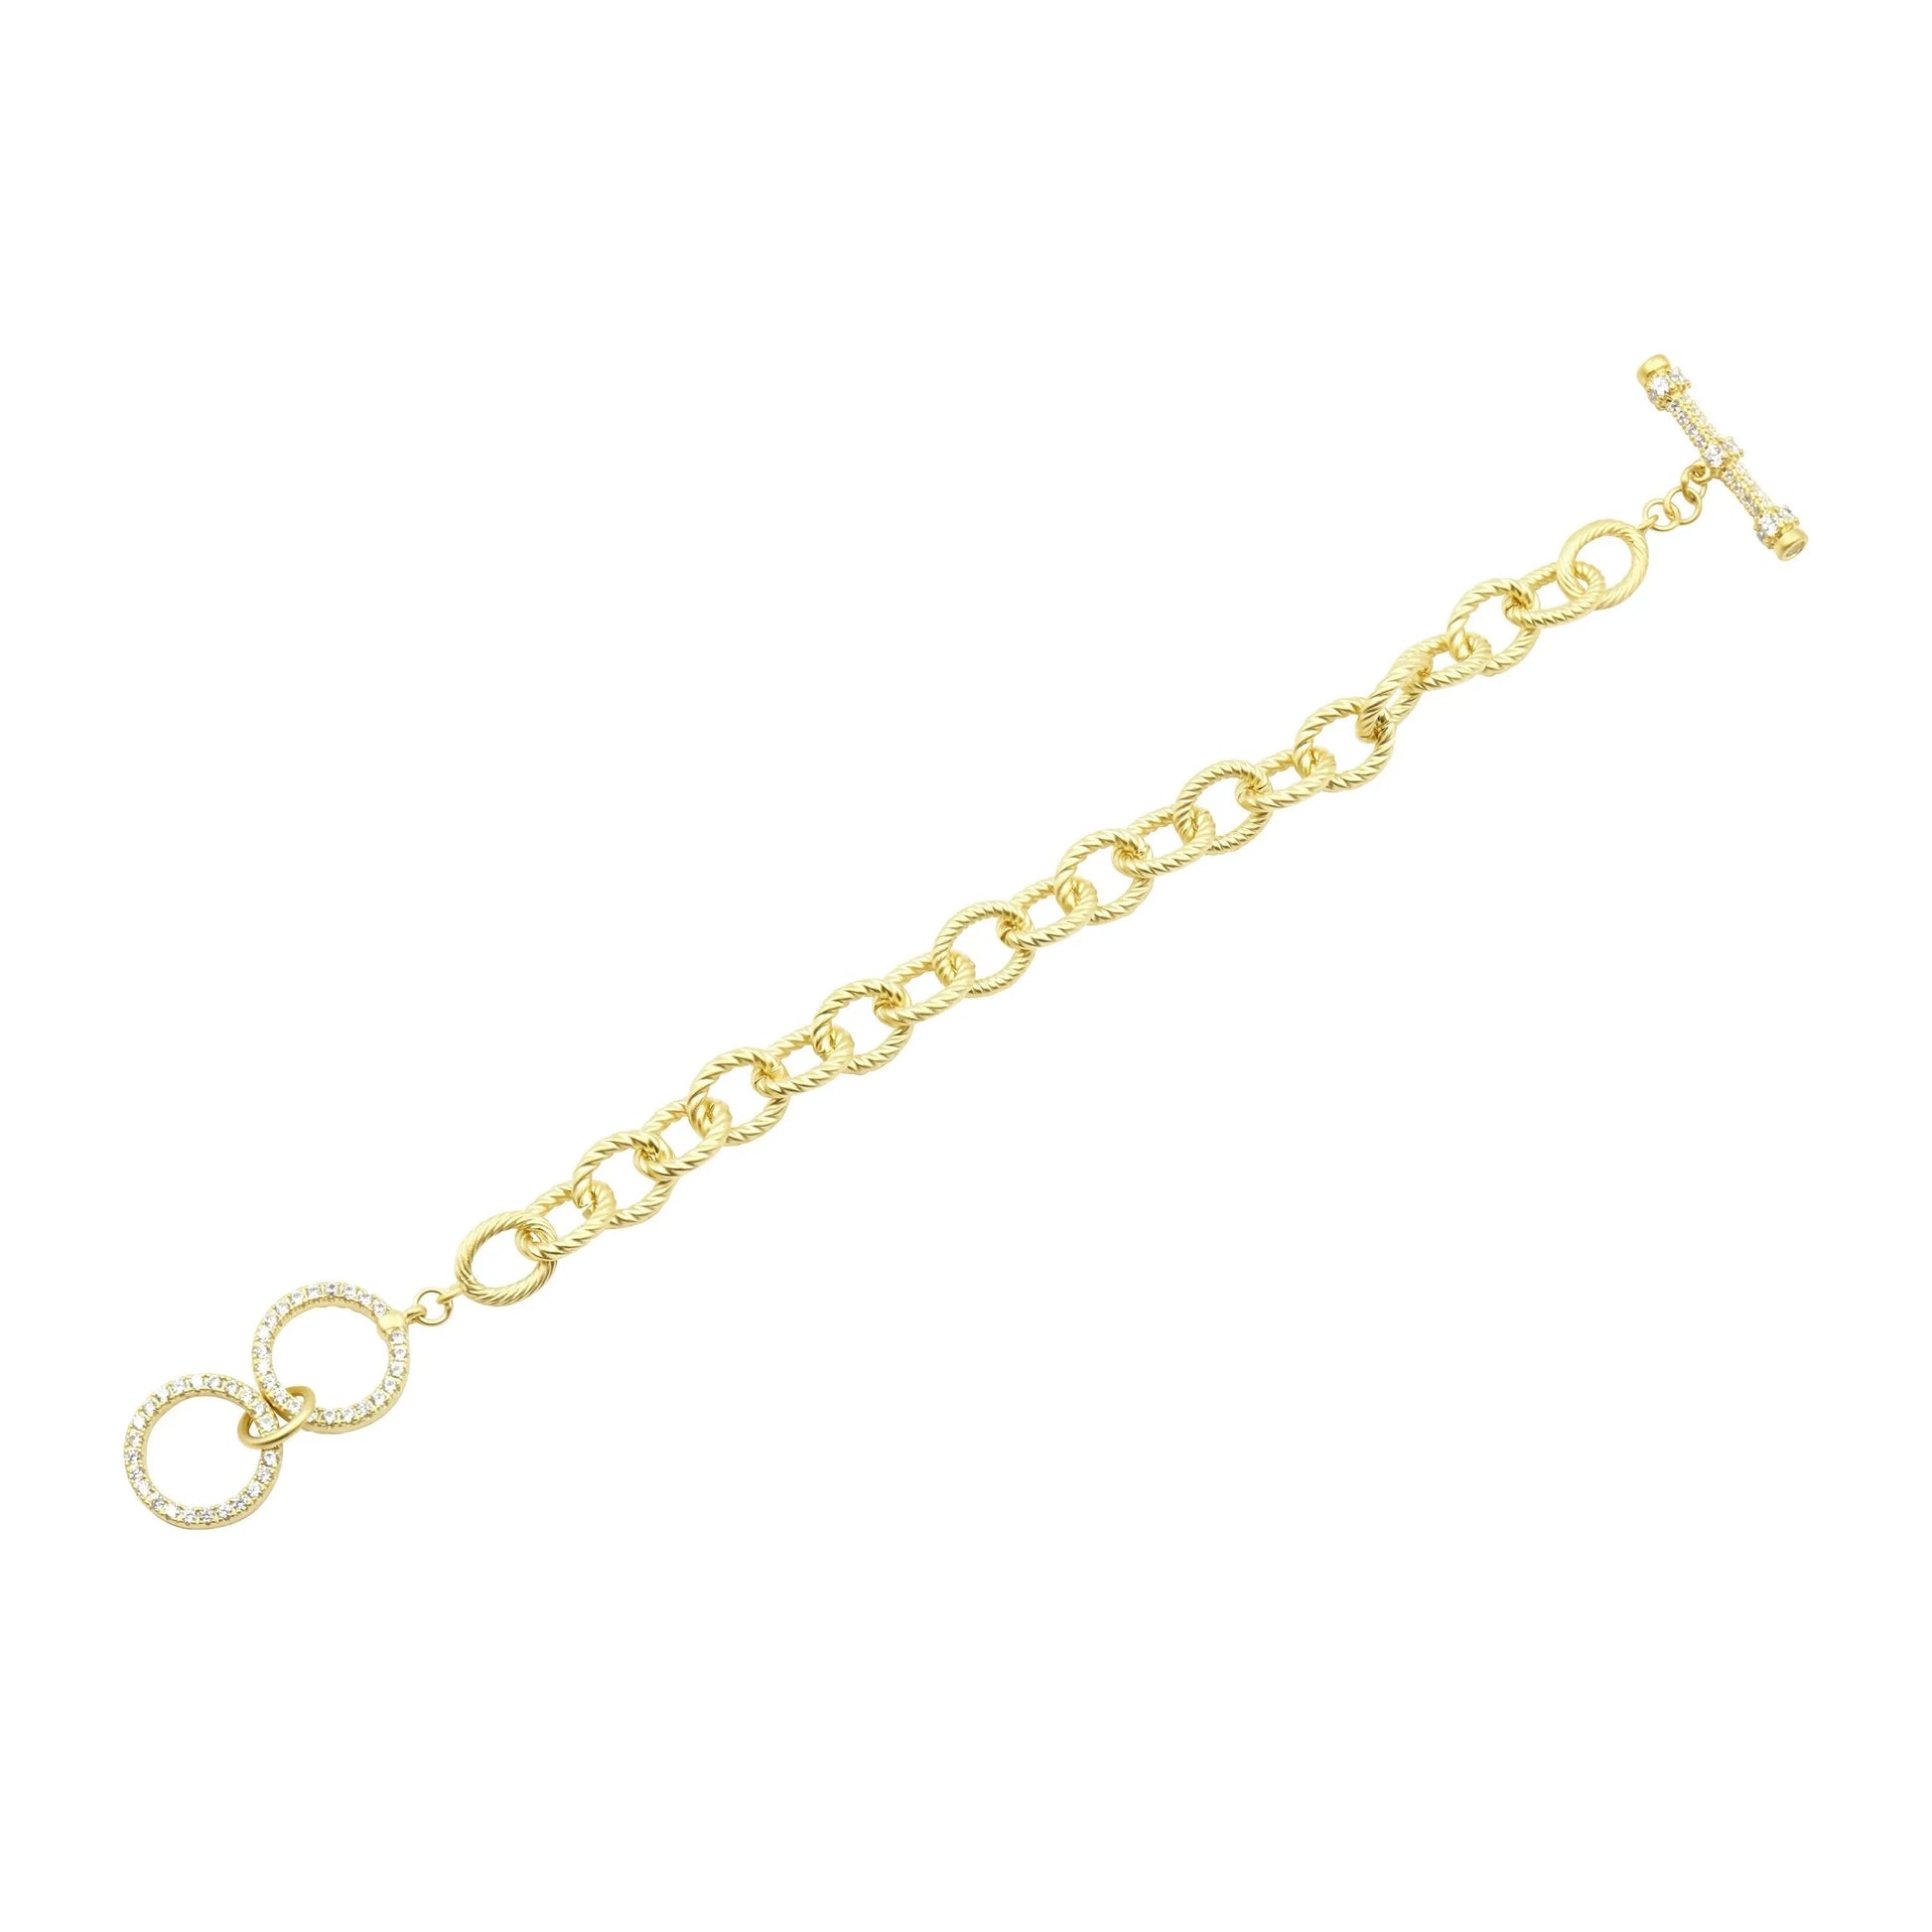  Harmony Golden Link Bracelet FREIDA ROTHMAN BRACELET